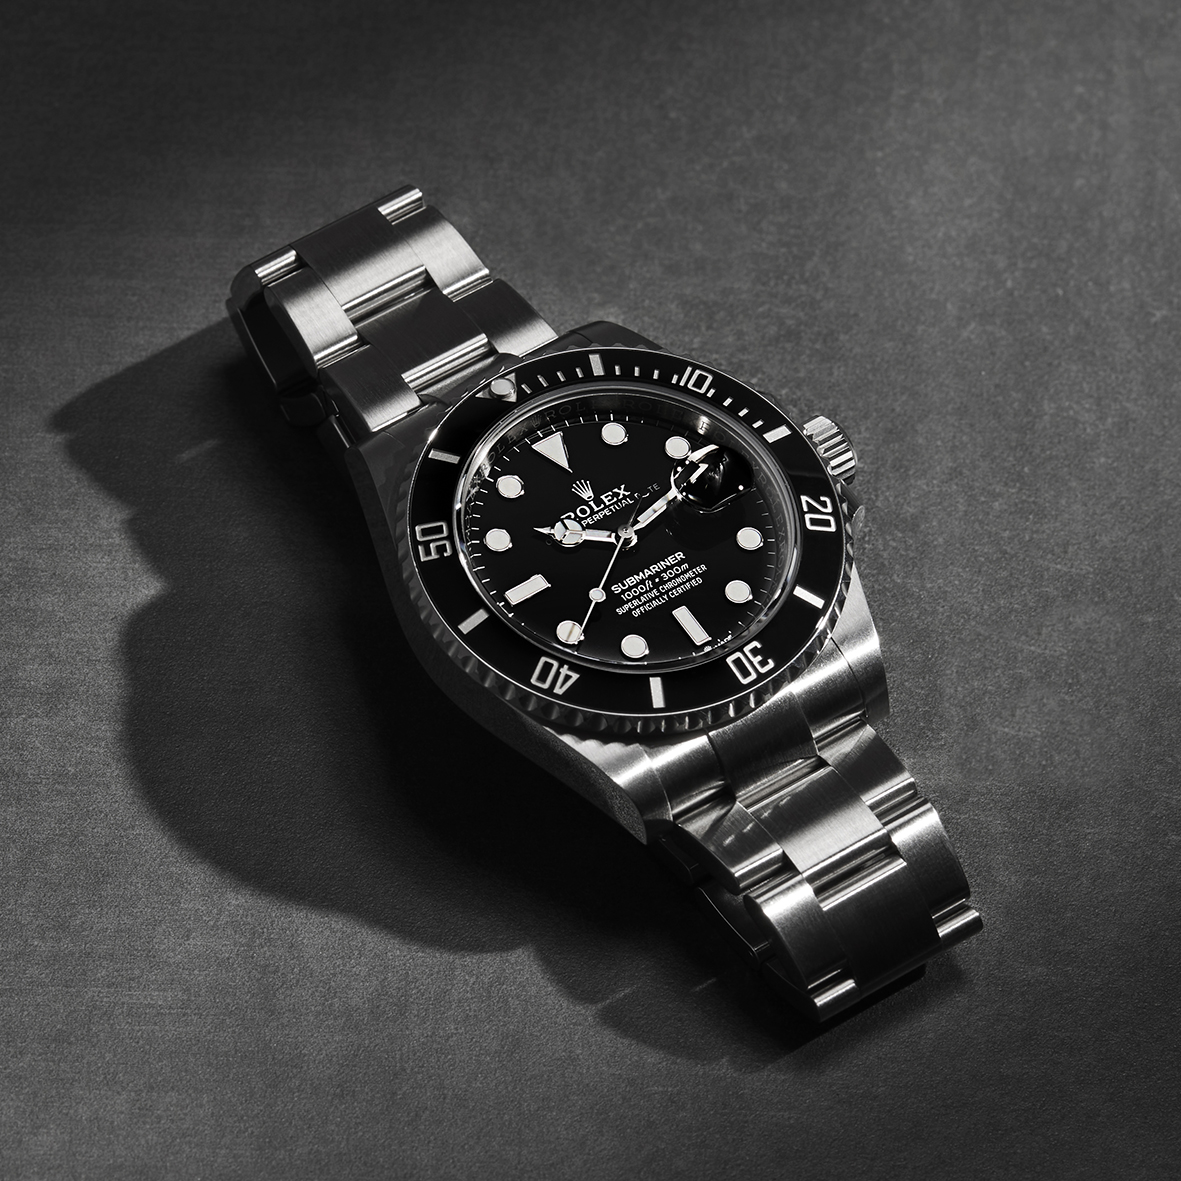 Silver and gold chronograph watch photo – Free Wristwatch Image on Unsplash